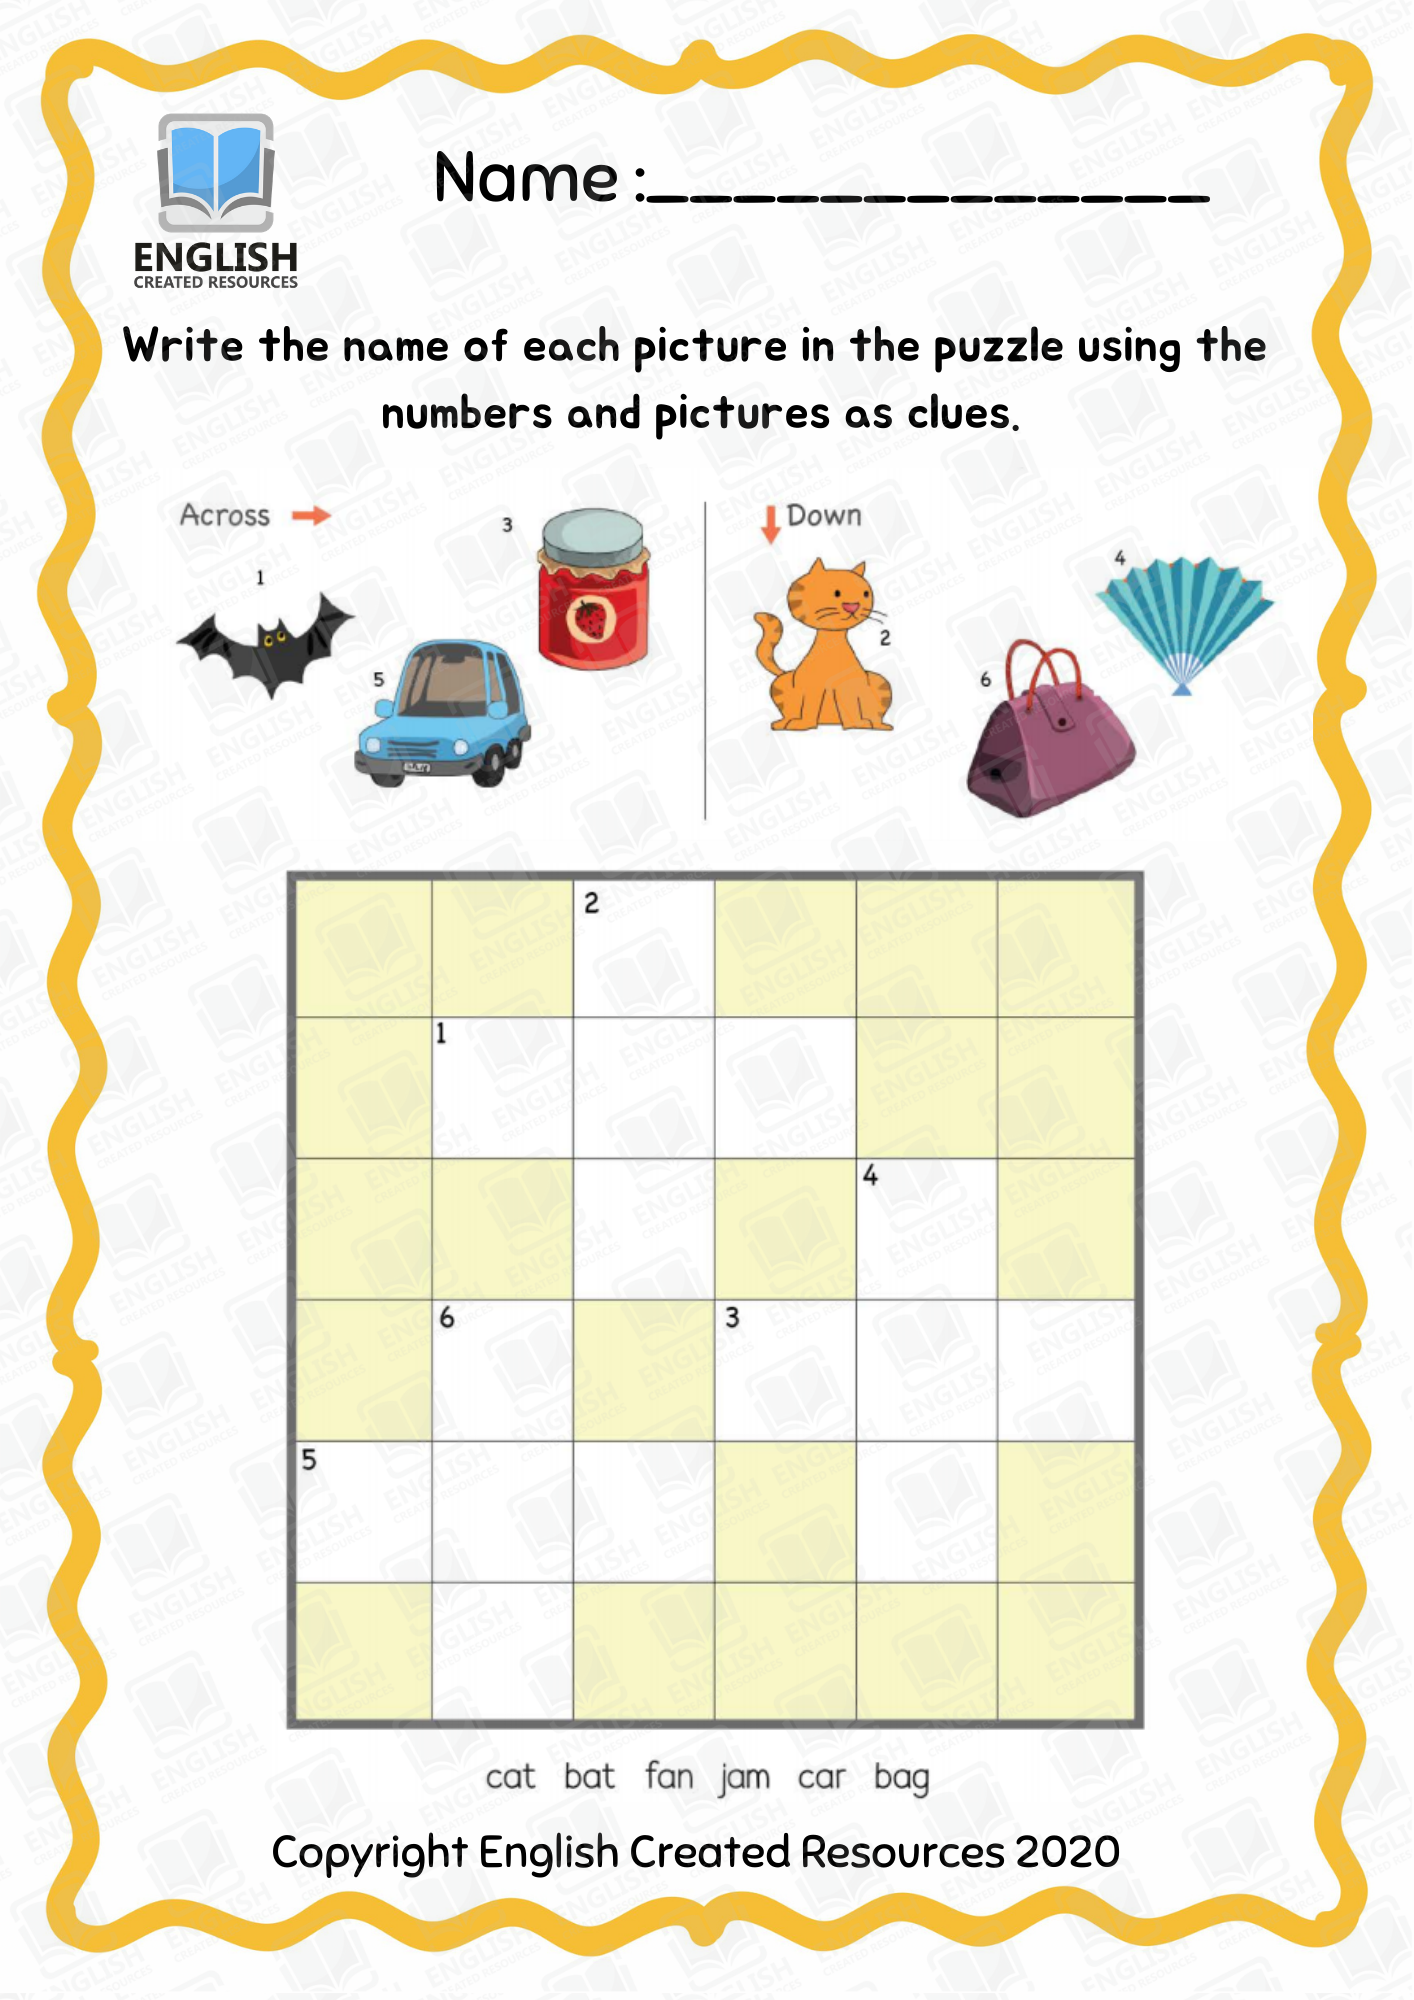 kindergarten-crossword-puzzle-english-created-resources